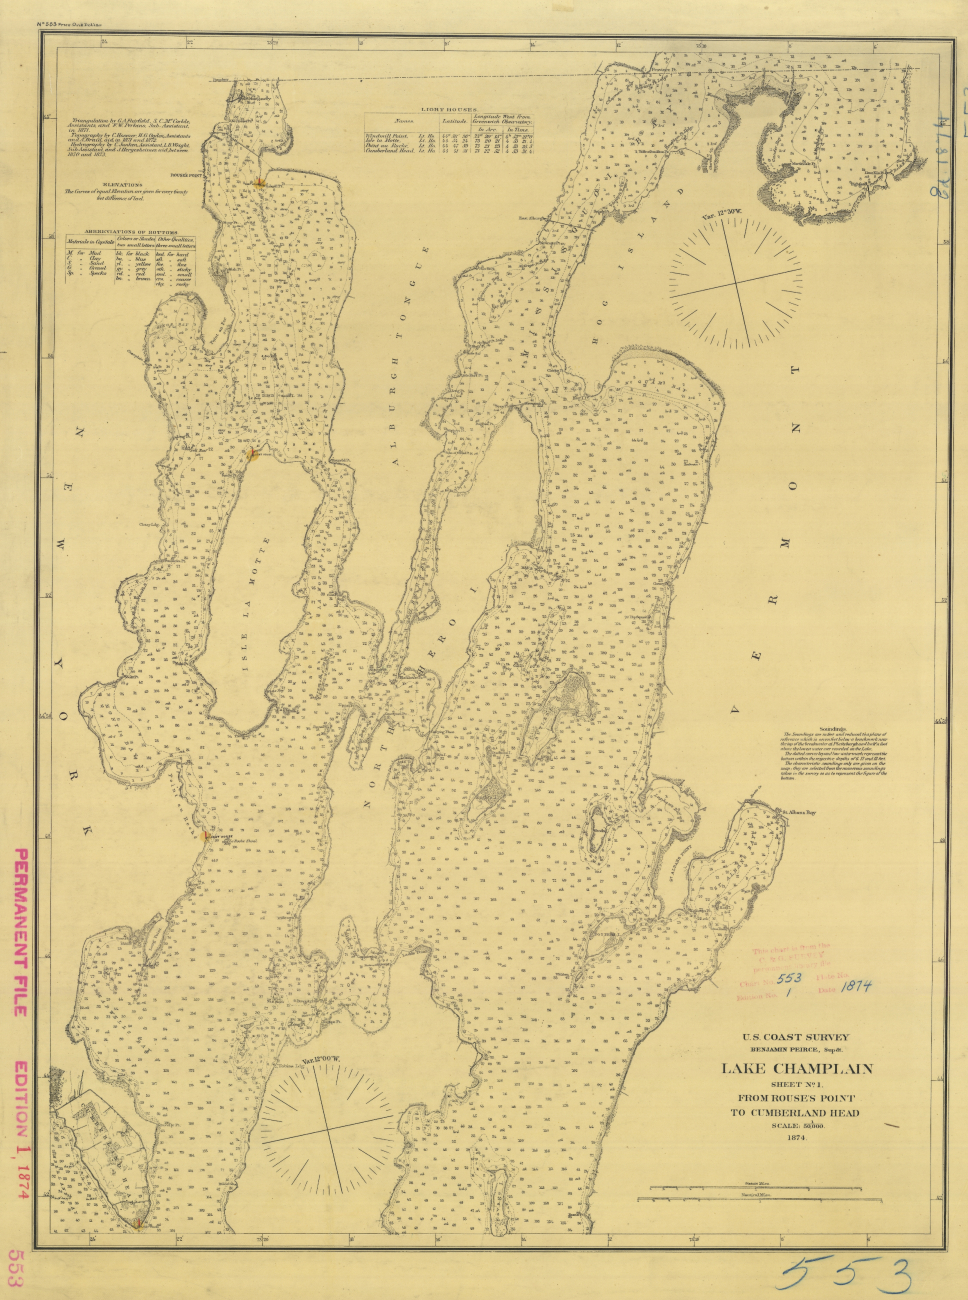 Coast Survey chart of Lake Champlain